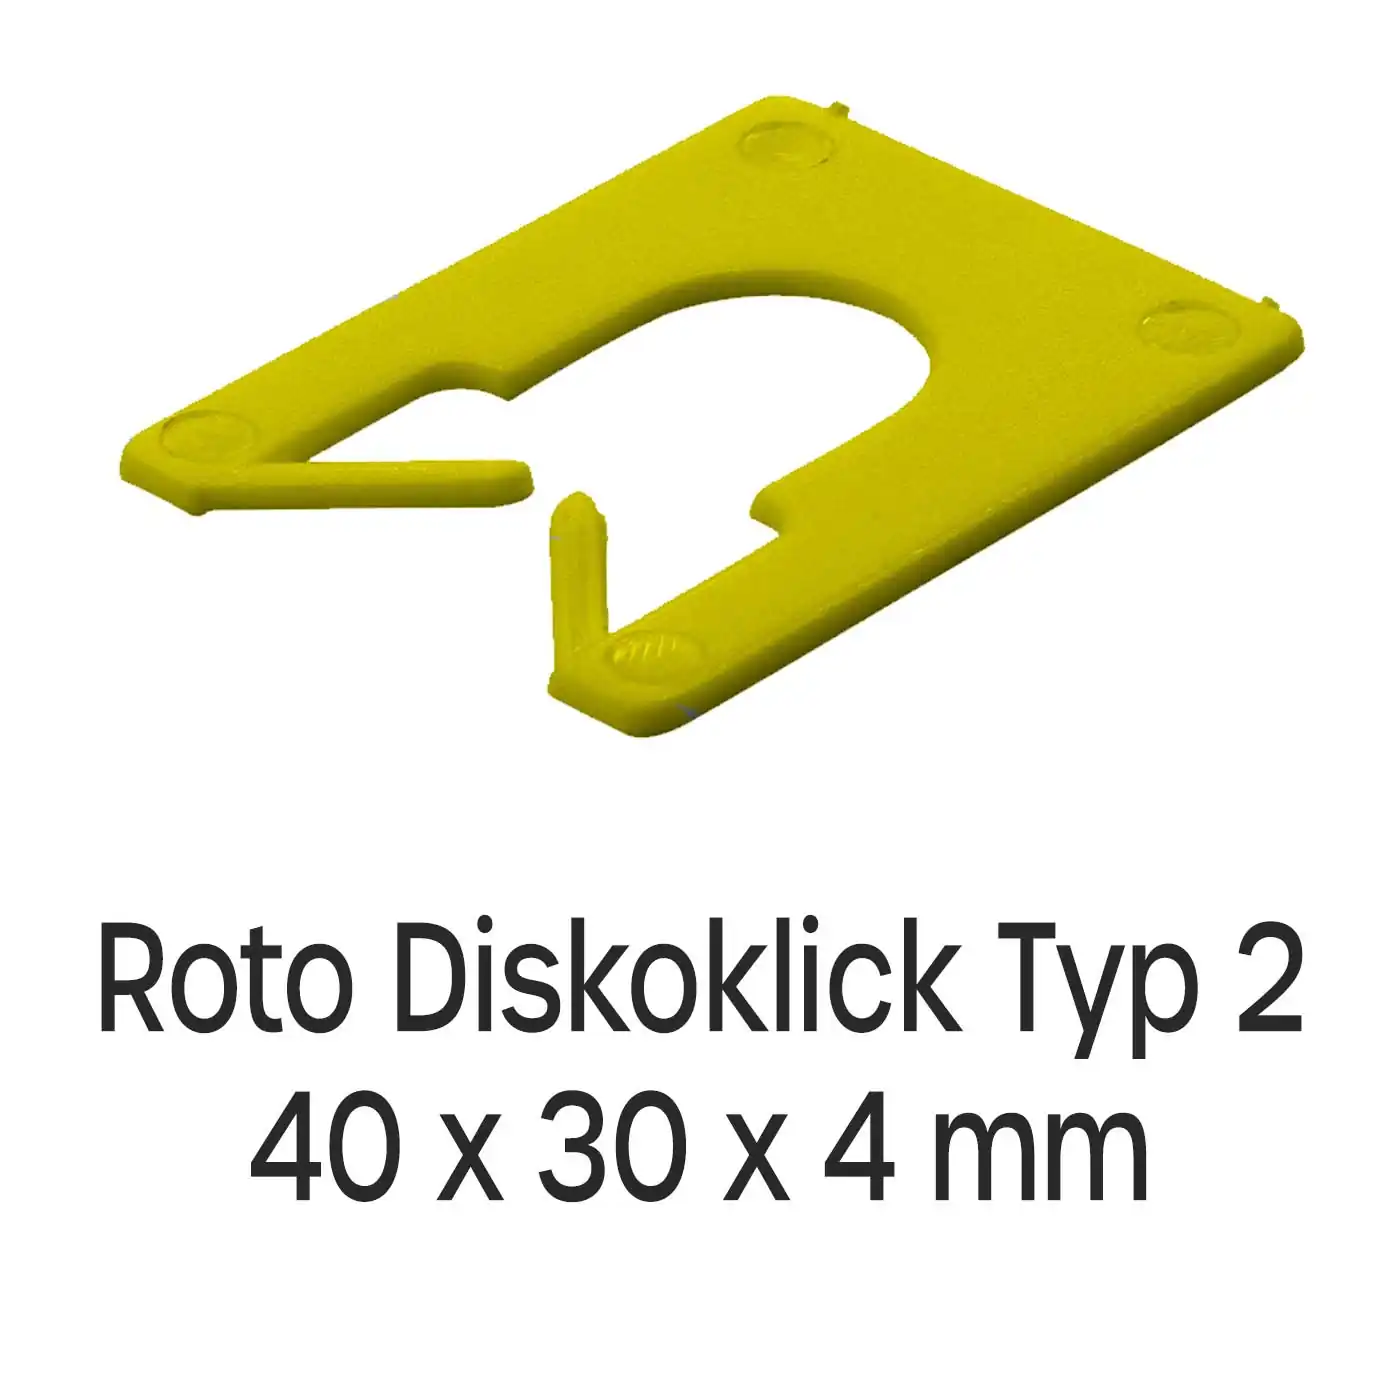 Distanzplatten Roto Diskoklick Typ 2 40 x 30 x 4 mm 1000 Stück